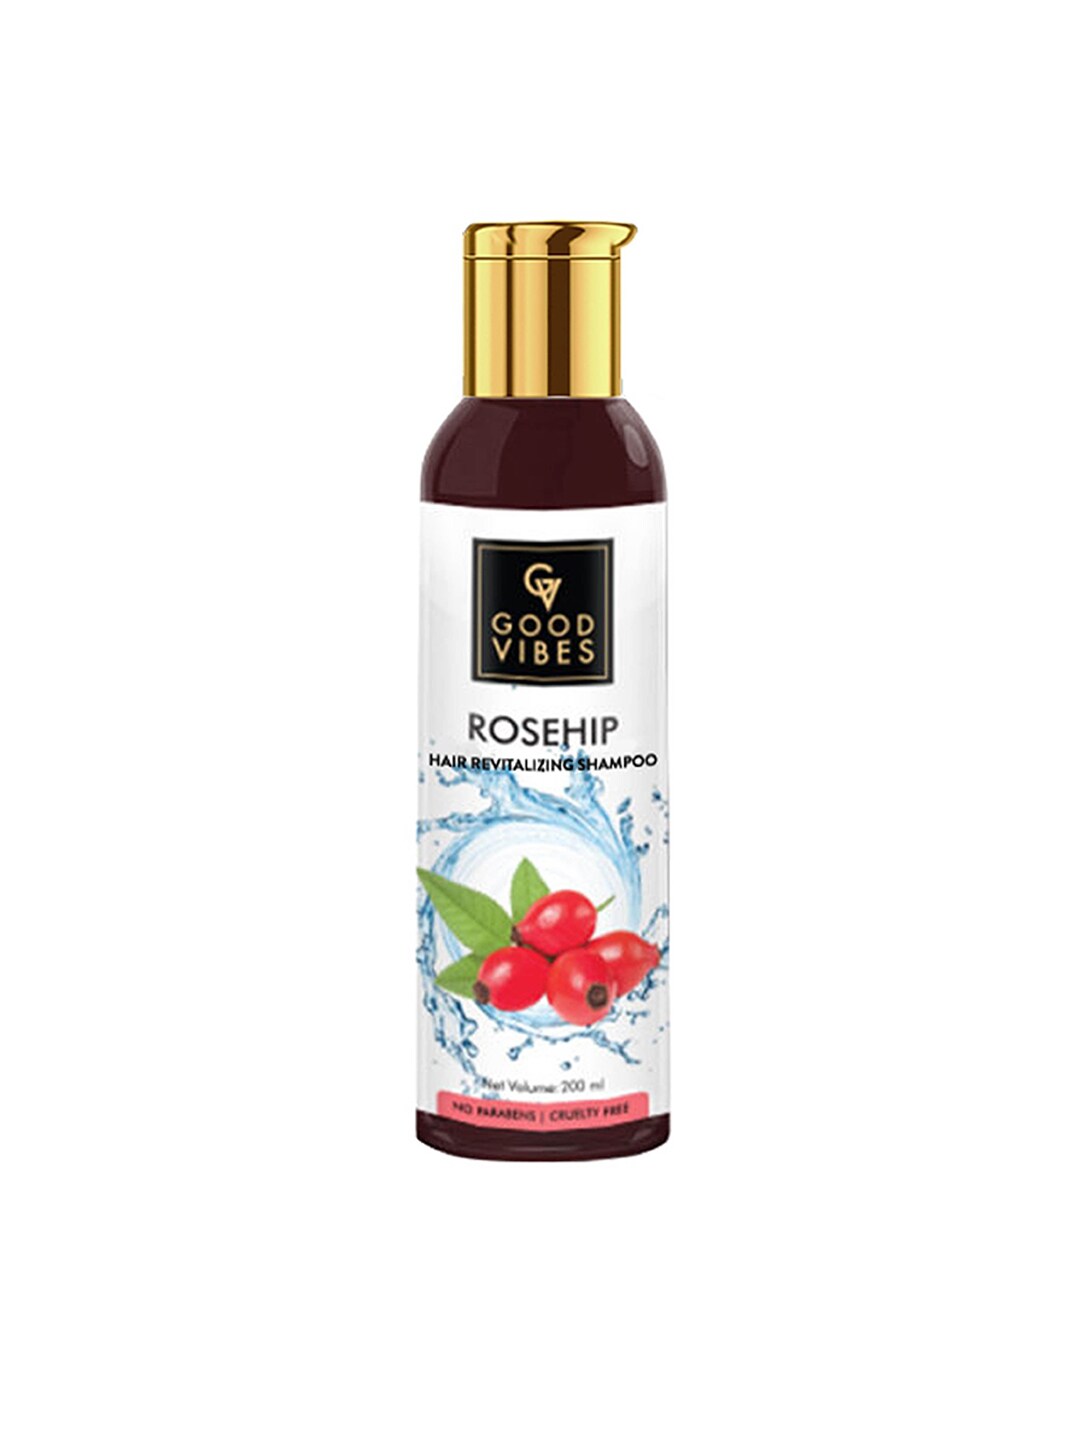 Good Vibes Unisex Rosehip Hair Revitalizing Shampoo 200 ml Price in India